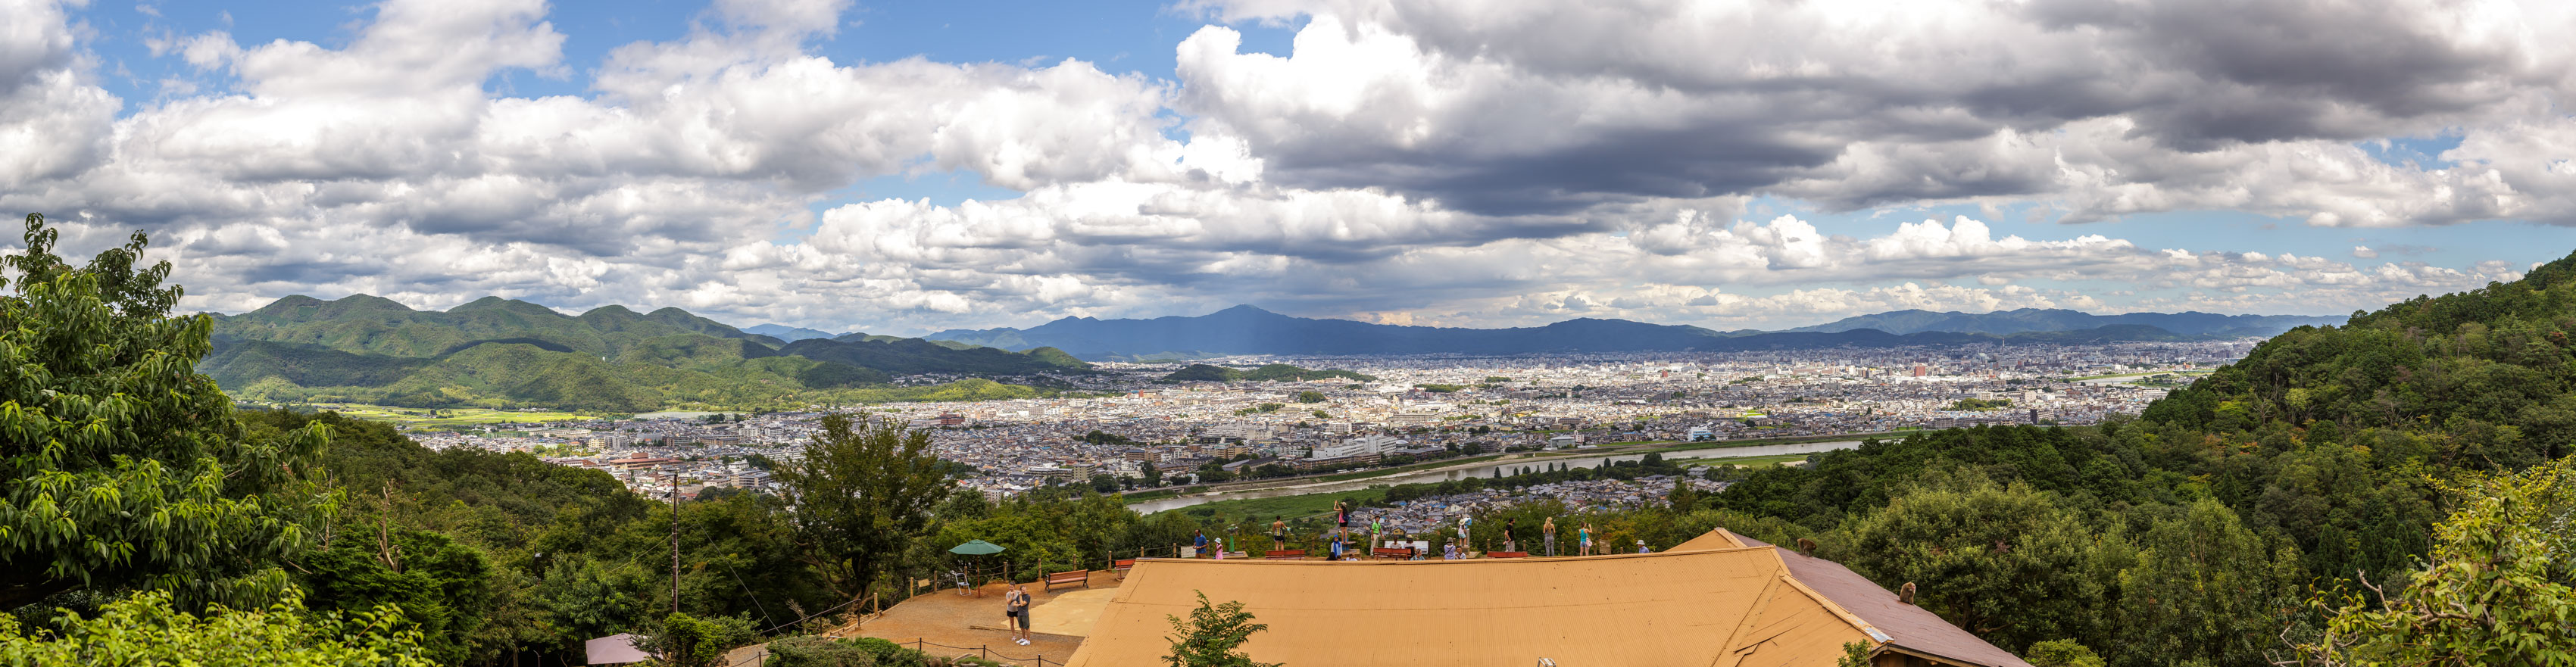 /Guewen/galeries/public/Voyages/Japon/kyoto/vista/Kyoto-vista_012.jpg